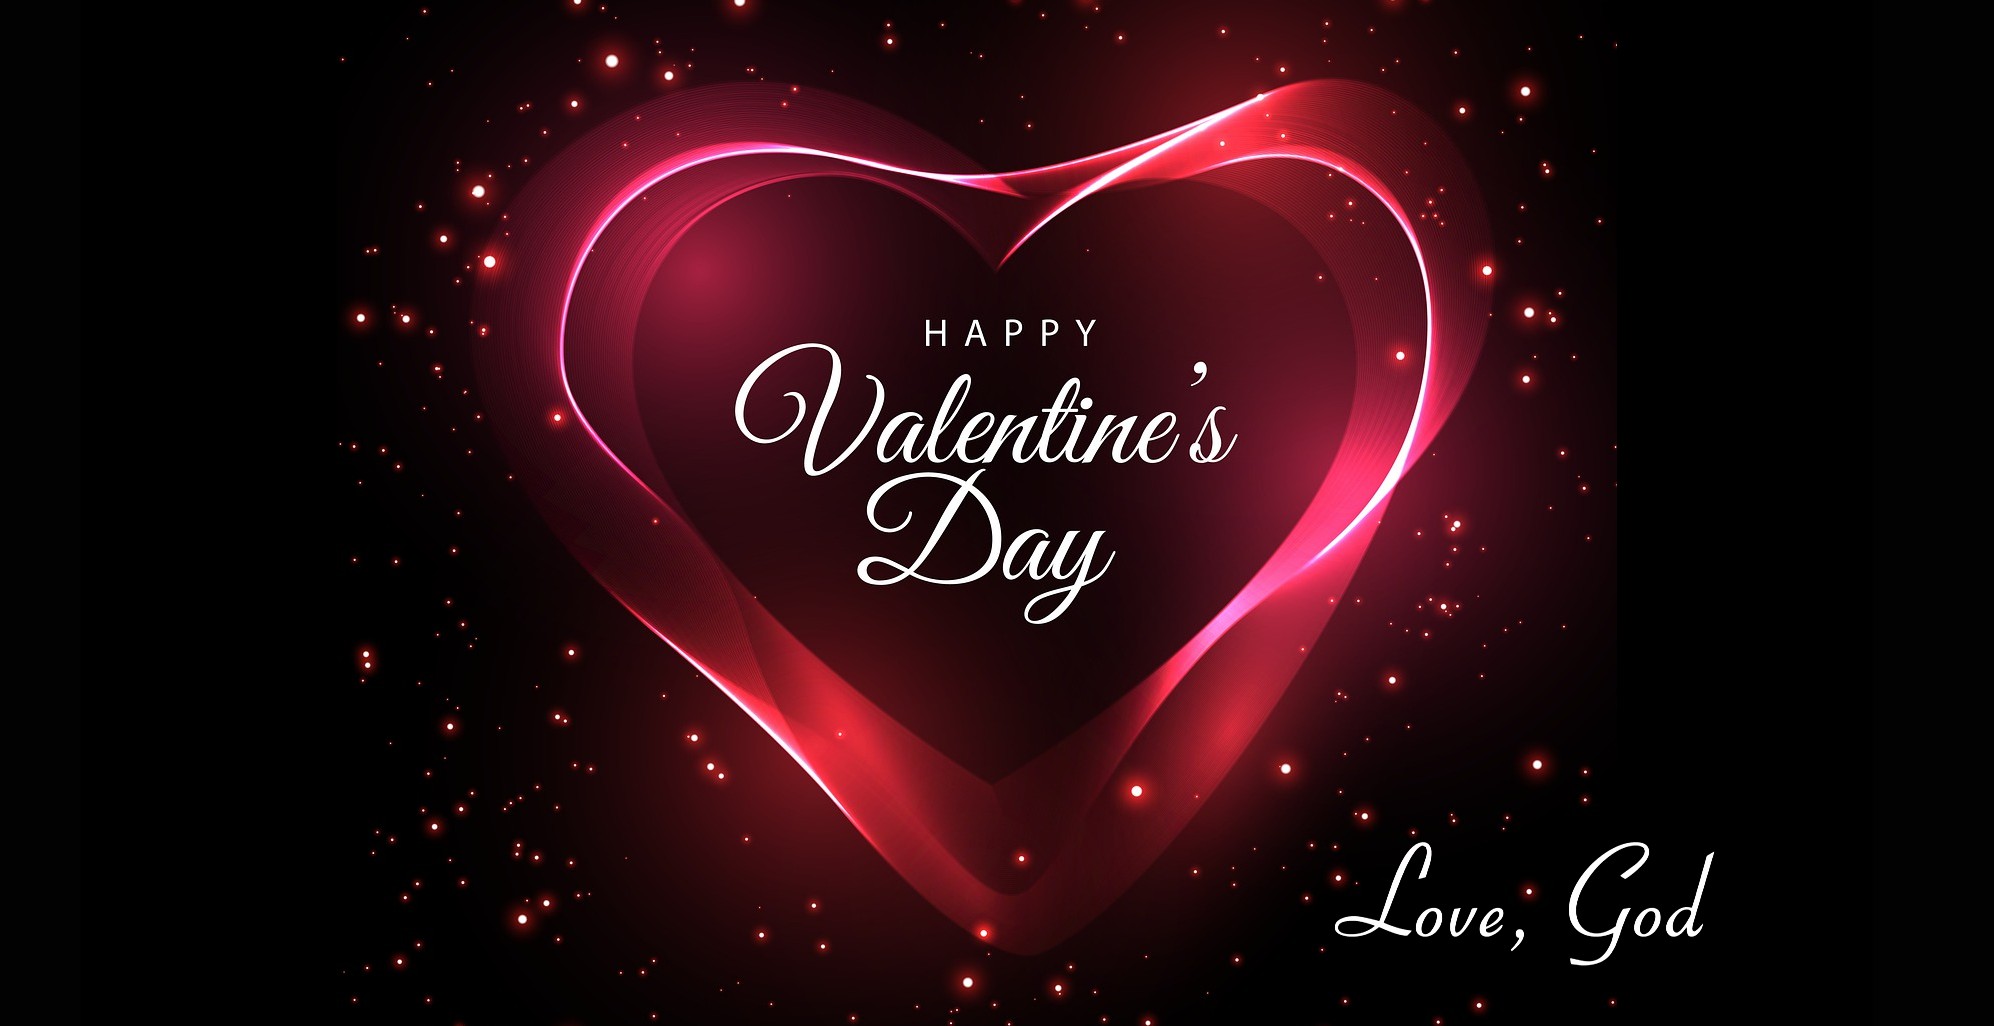 Happy Valentine’s Day-Love, God